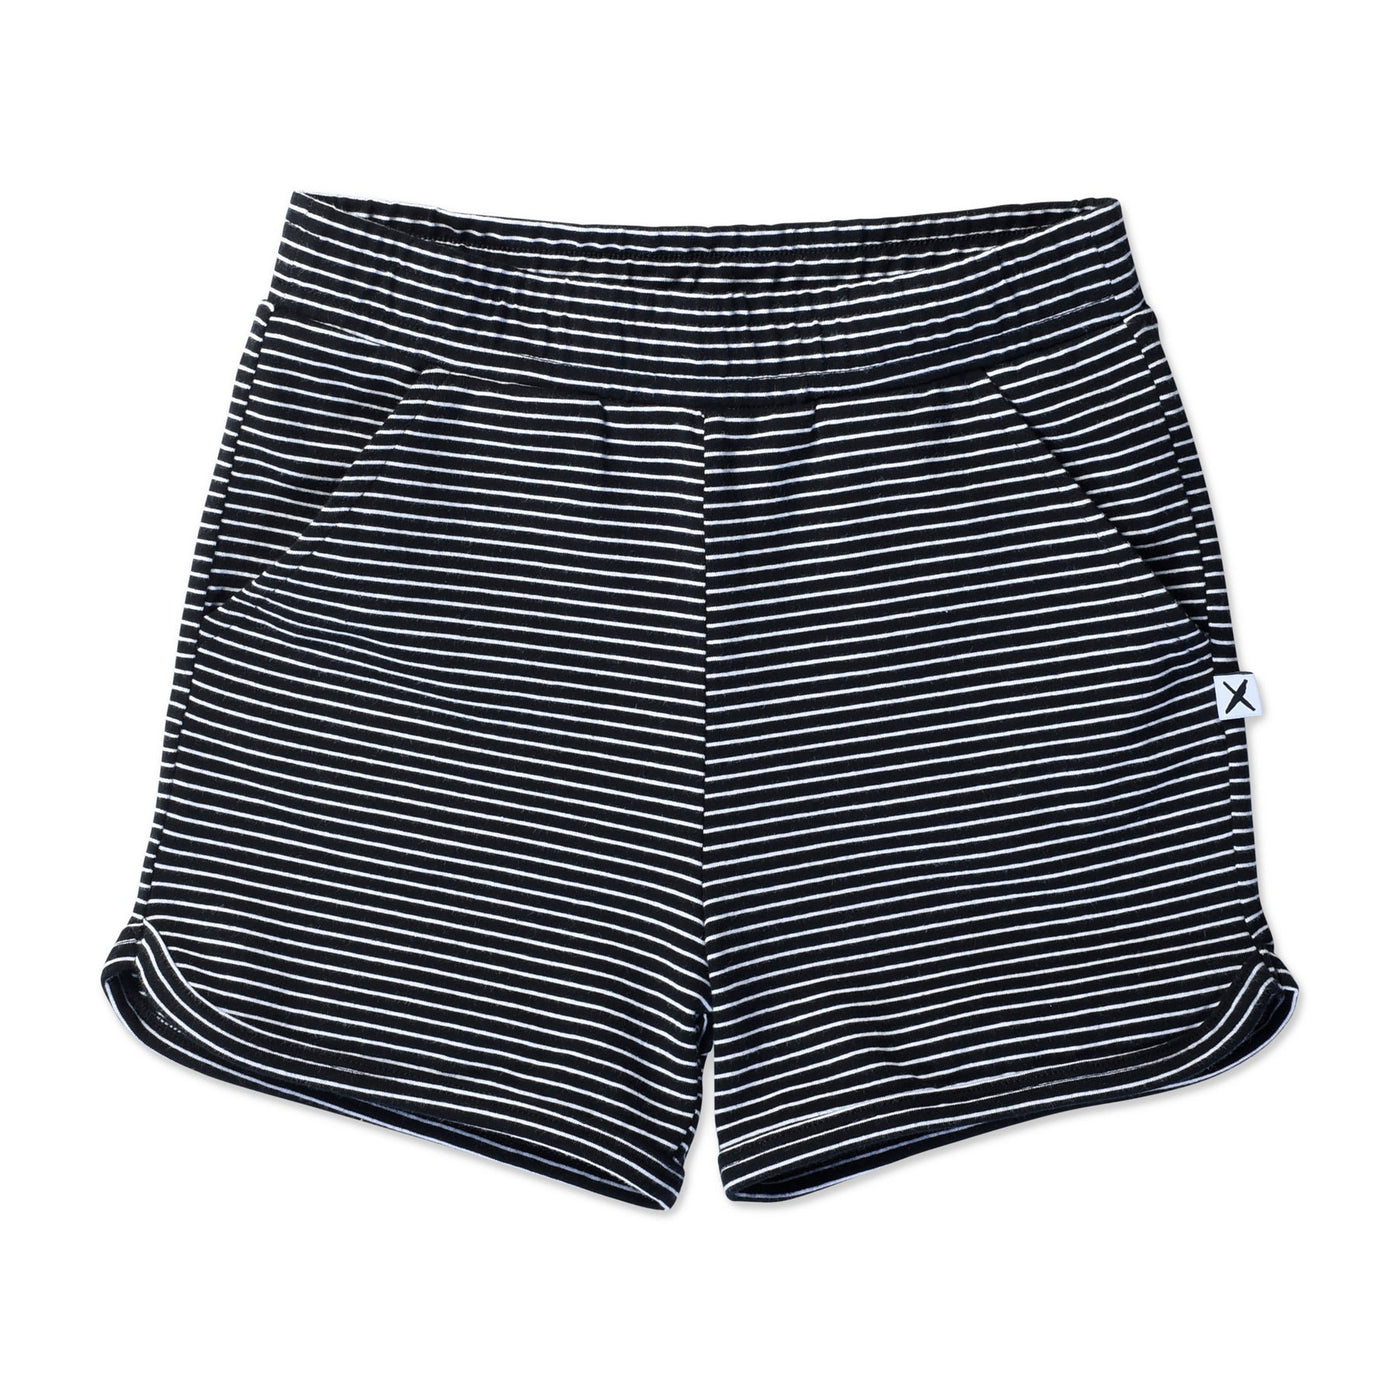 Sport Shorts - Black Stripe Shorts Minti 